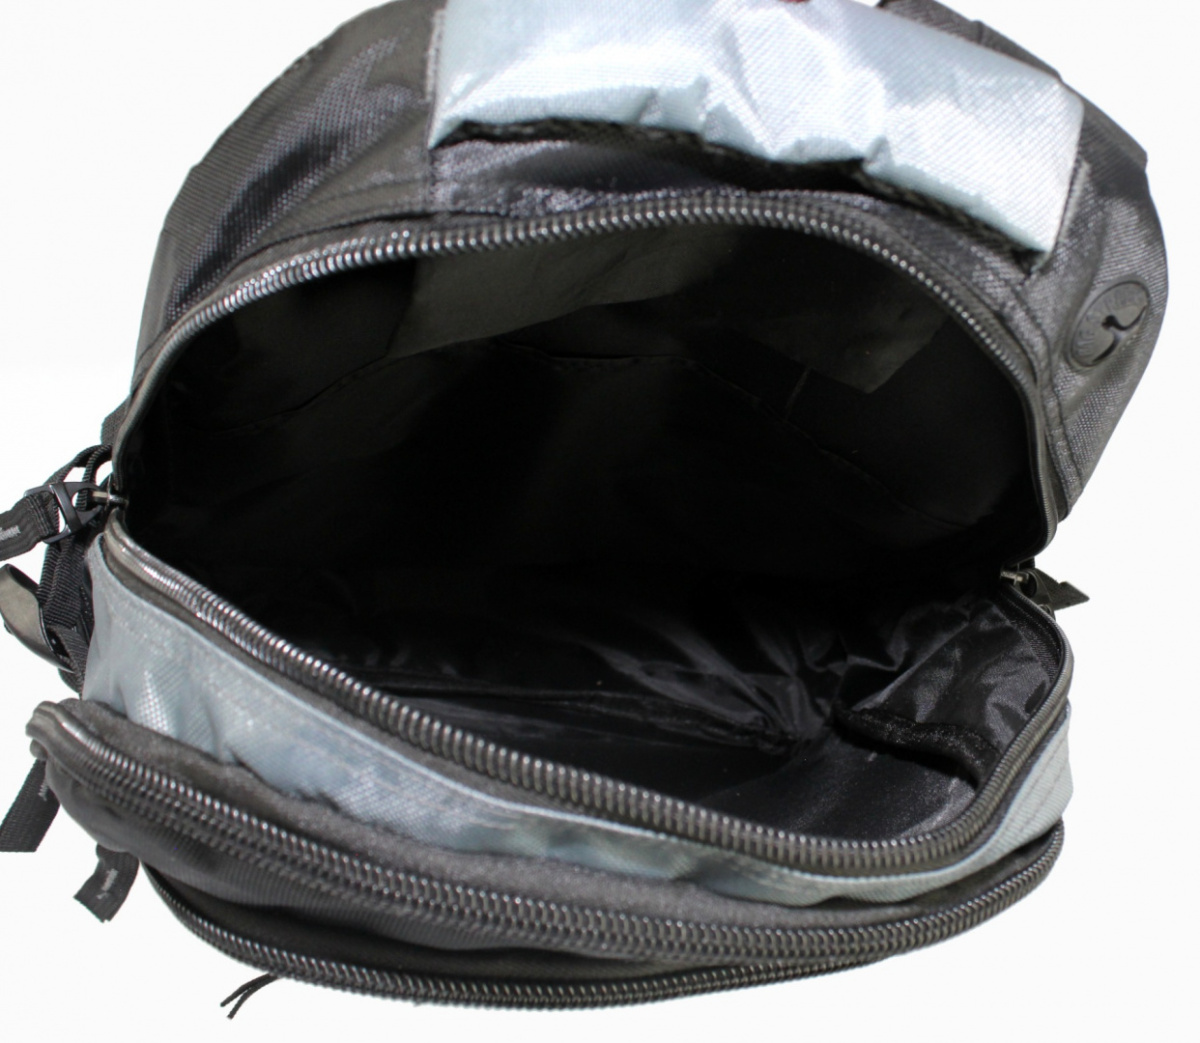 Solidny Plecak Bag Street ''DE LUXE'' Duży Z Funkcją Noszenia Laptopa BS4003 15''